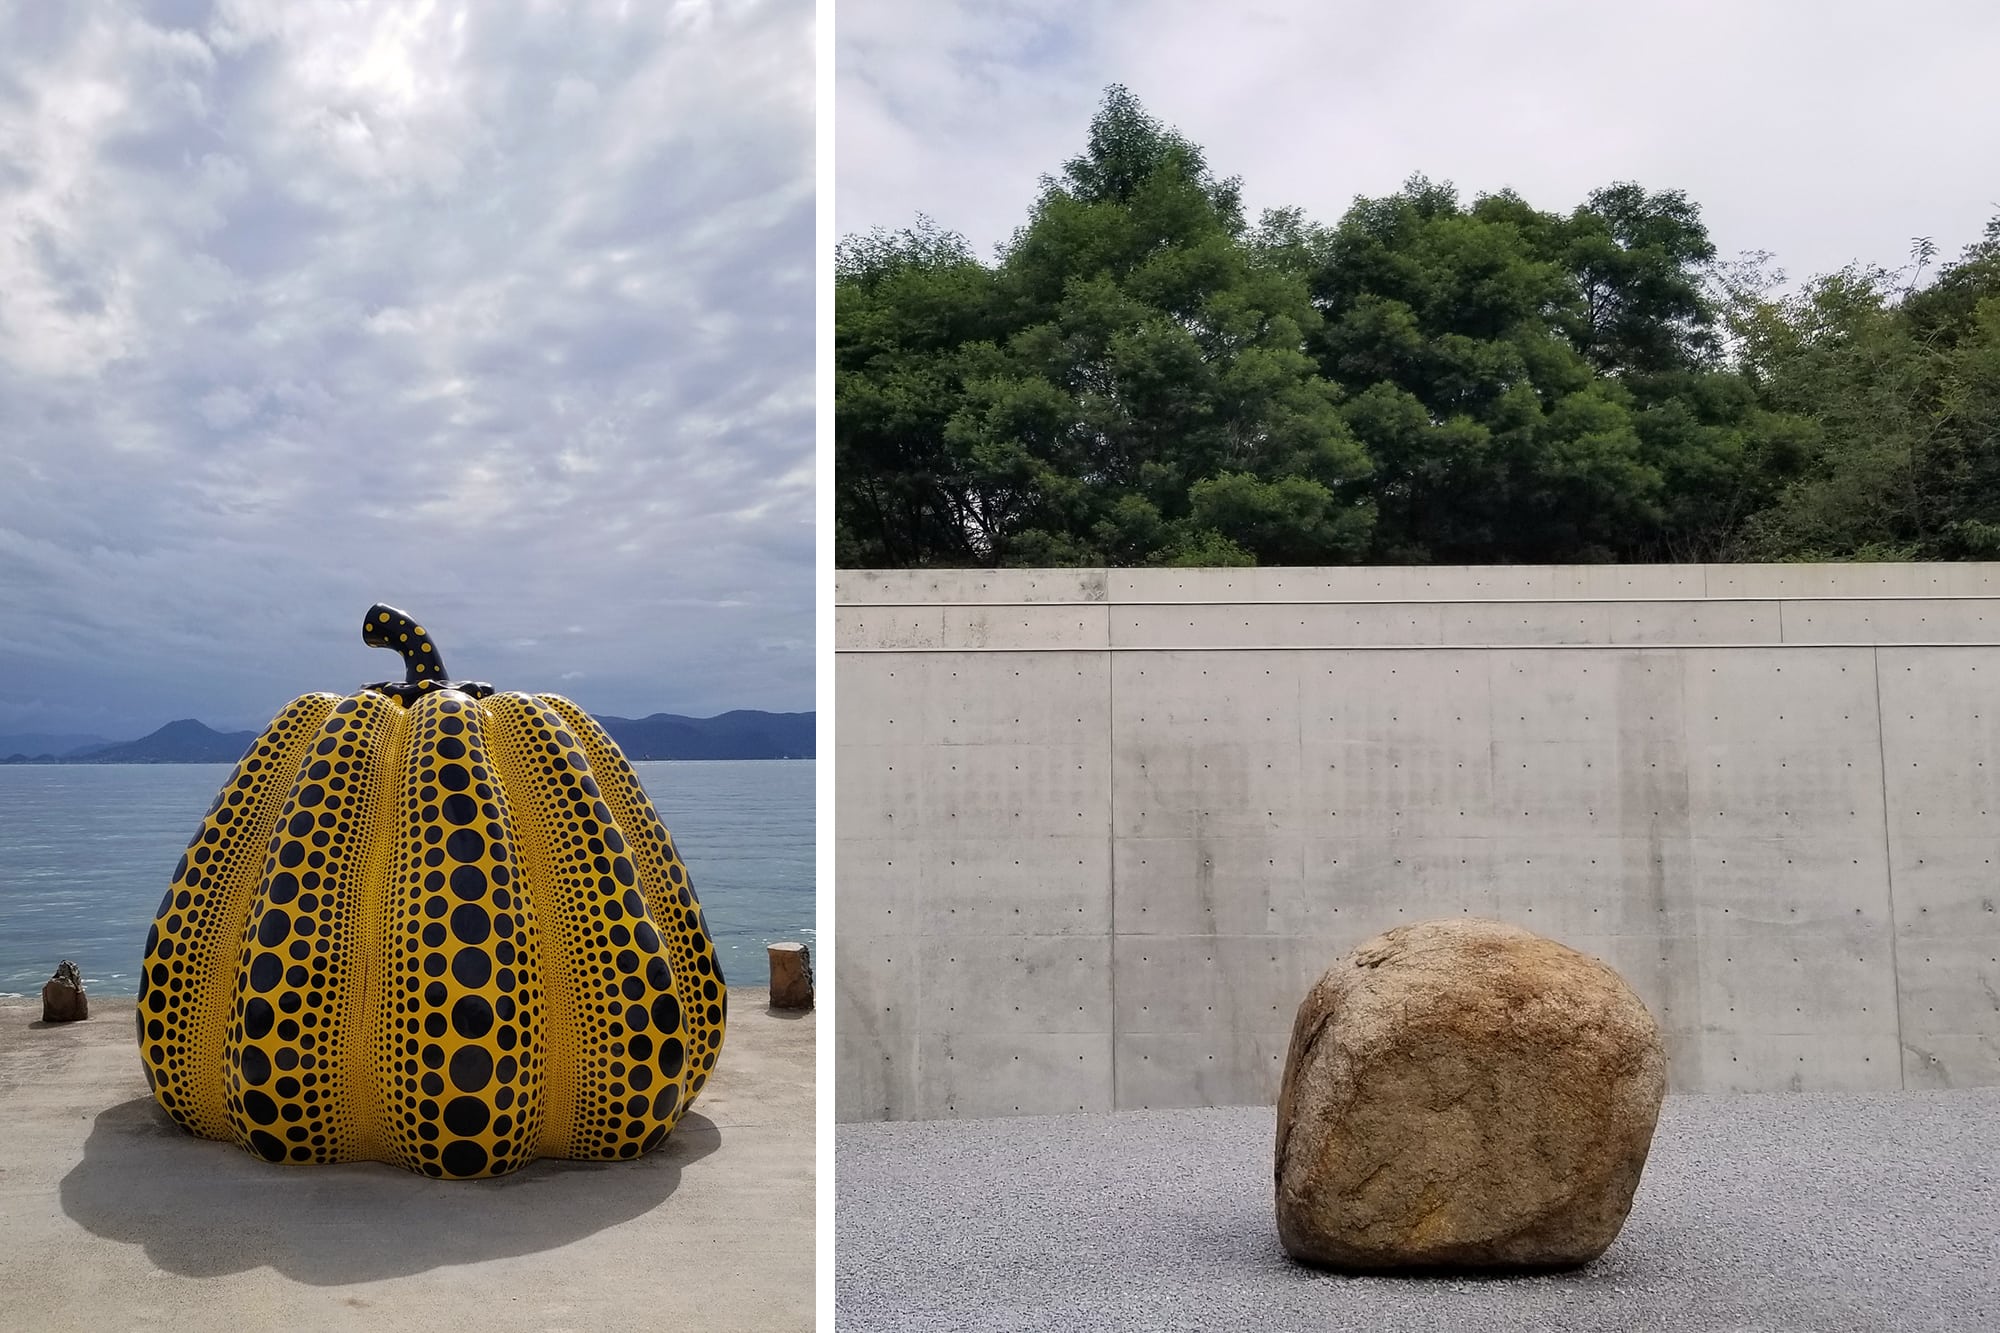 16 female travel bloggers reveal their favorite lesser-known islands - Naoshima, Japan (art island) #bucketlist #naoshima